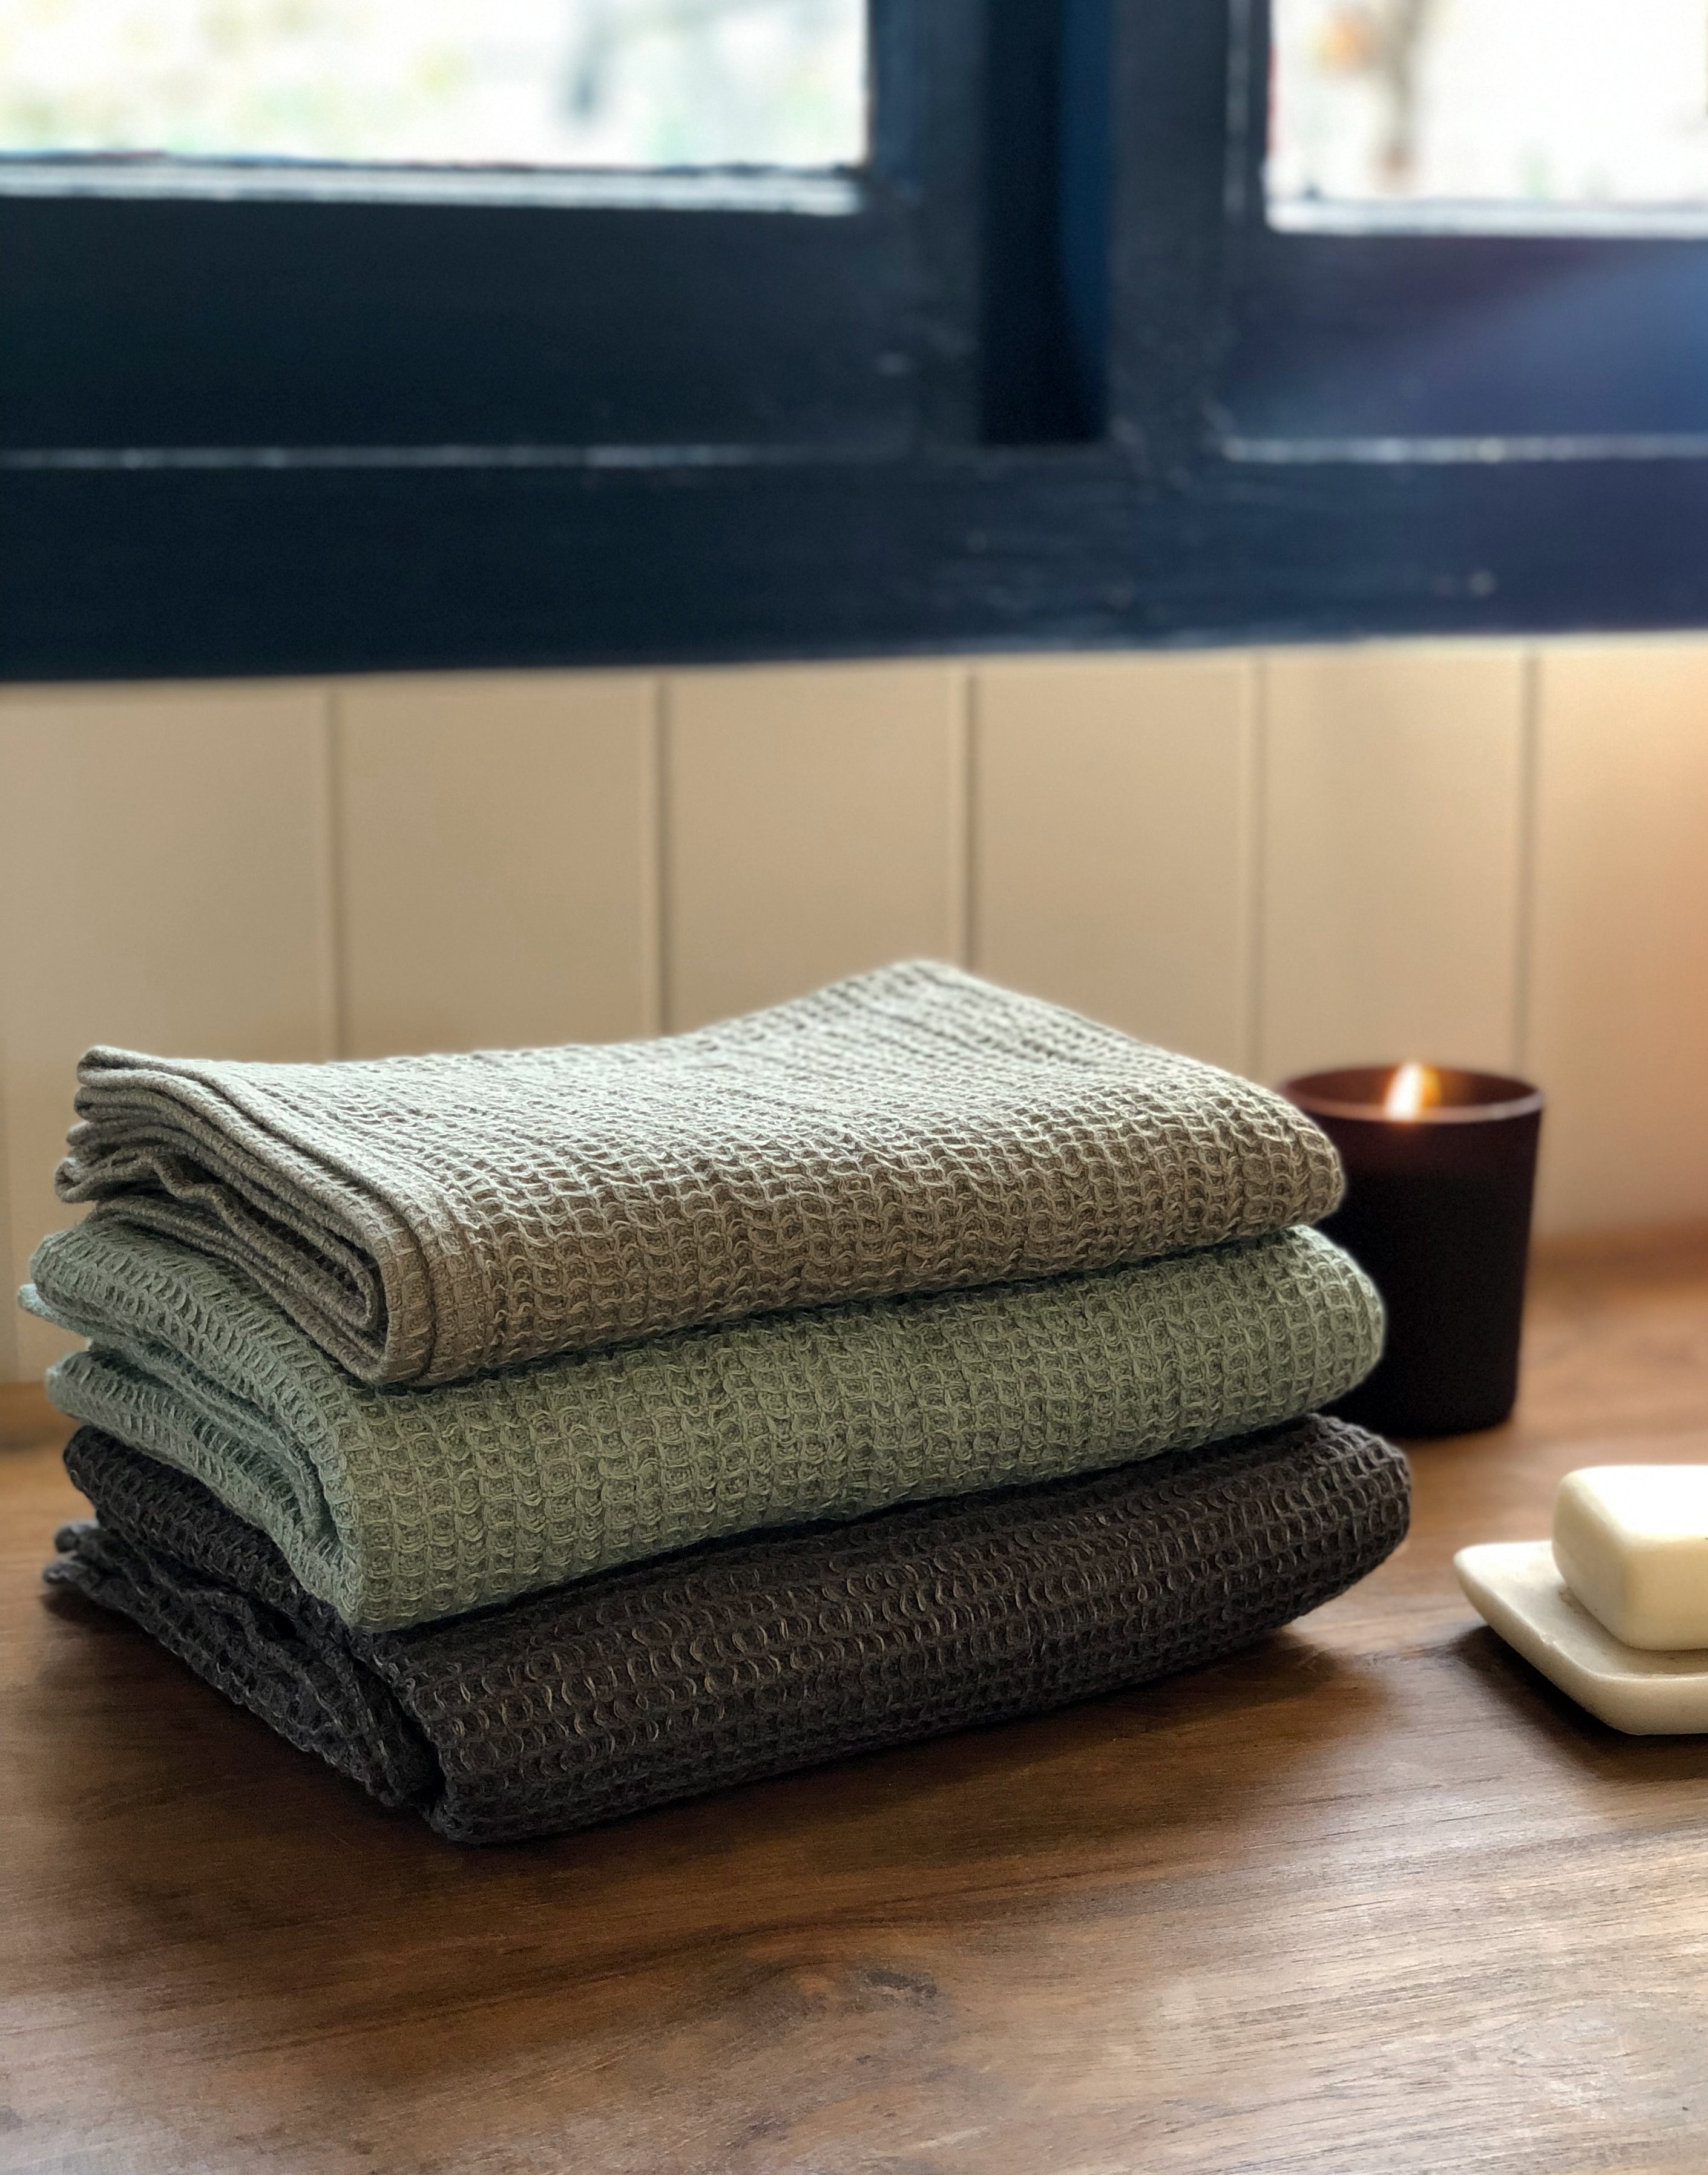 Linen Waffle Towels  Linen-Cotton Towels in Few HomeyLinen Colors